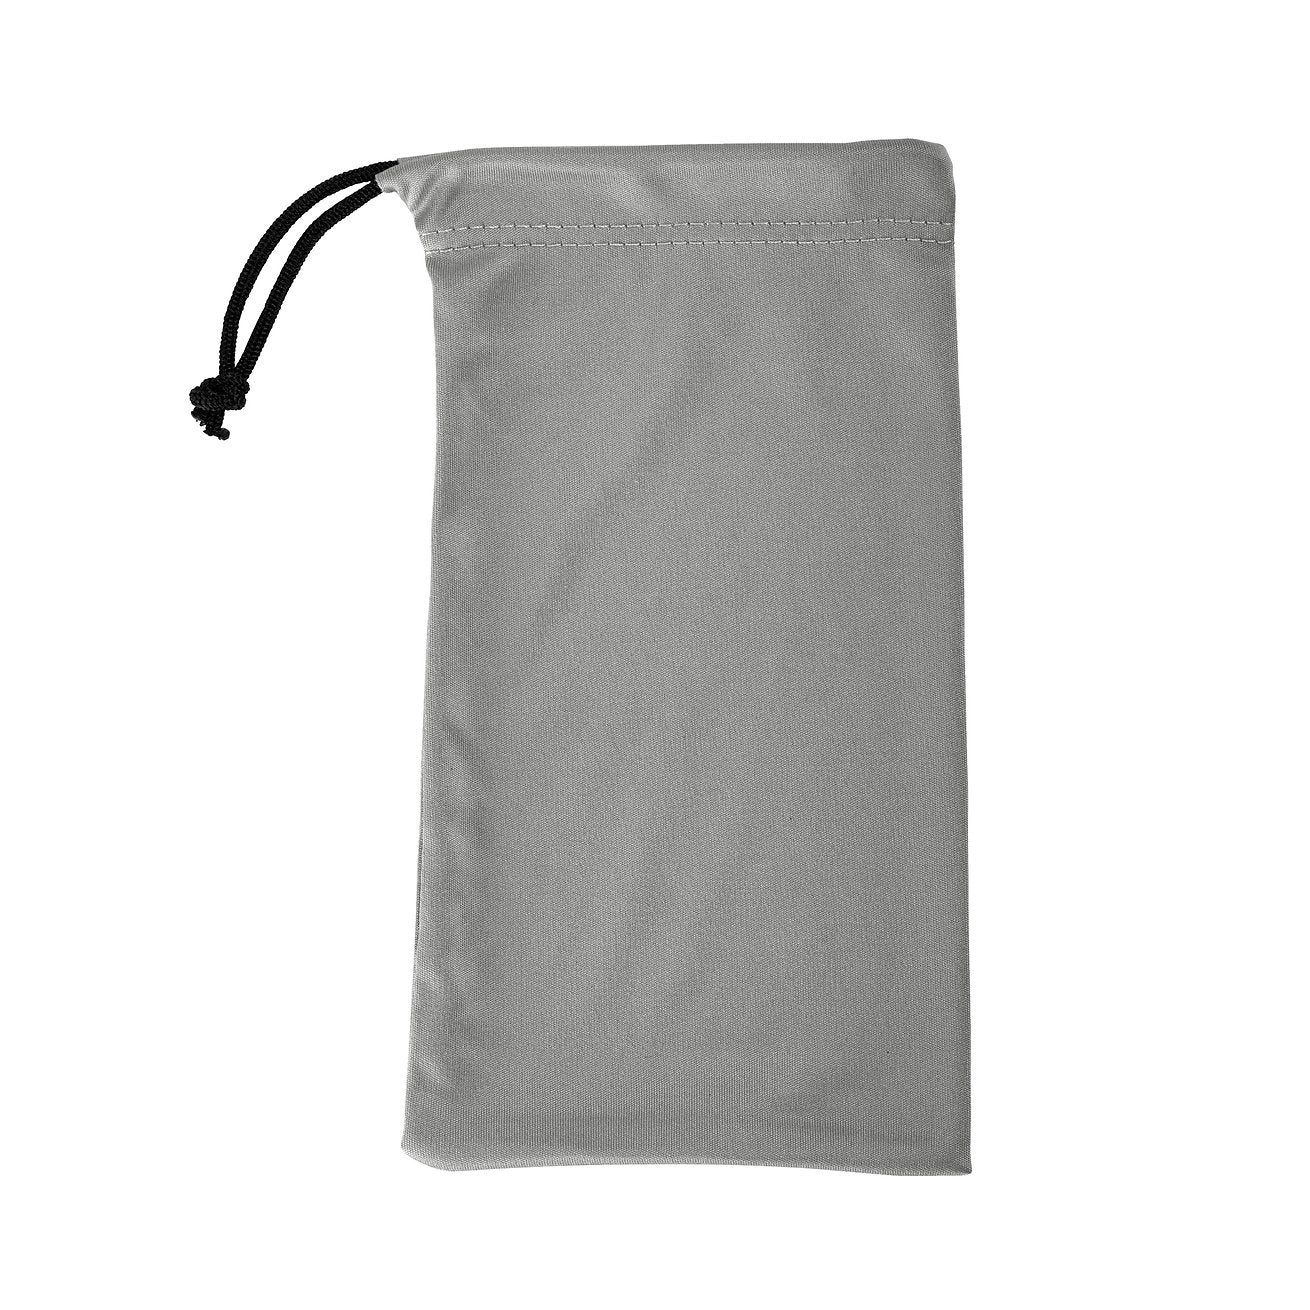 Grey drawstring bag for glasses